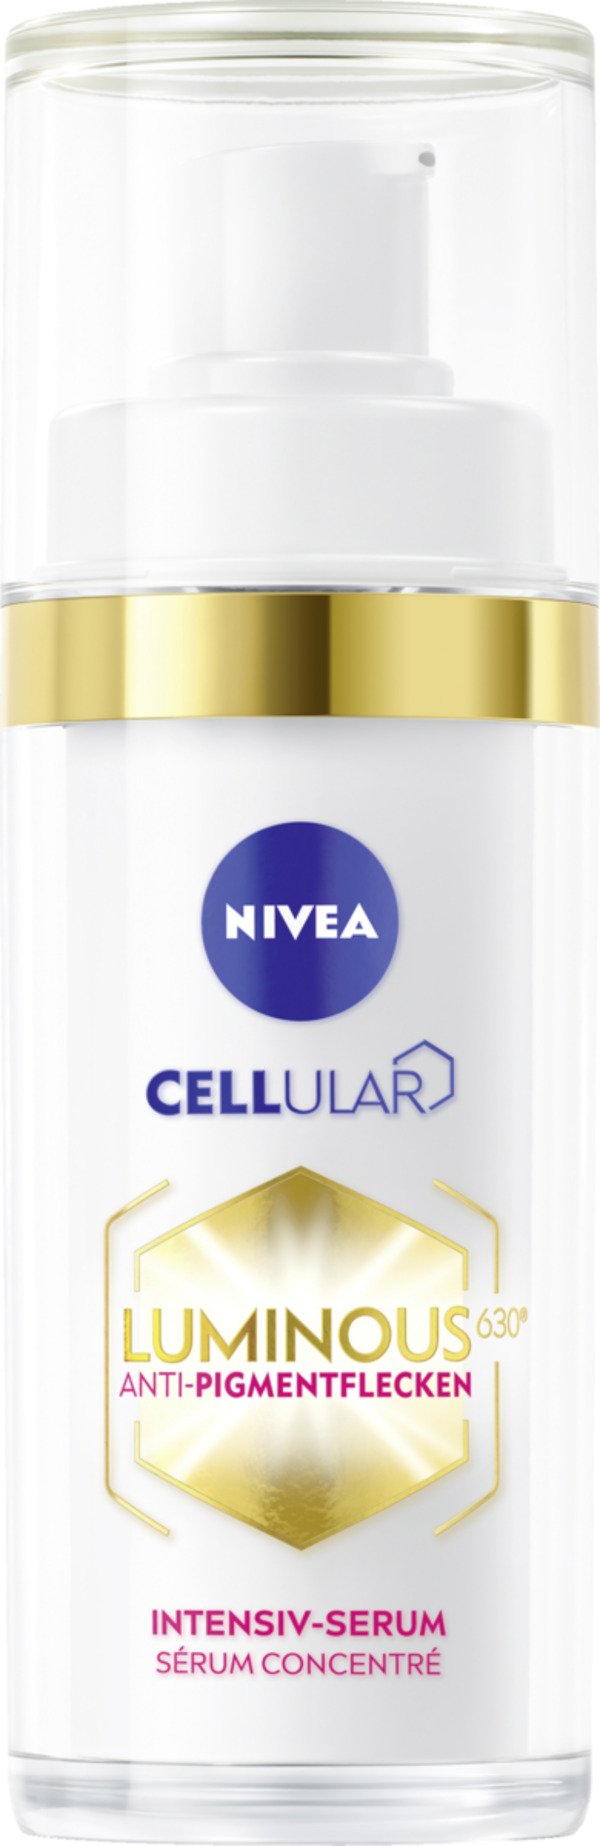 Bild 1 von NIVEA Cellular Luminous630° Anti-Pigmentflecken Intensiv-Serum